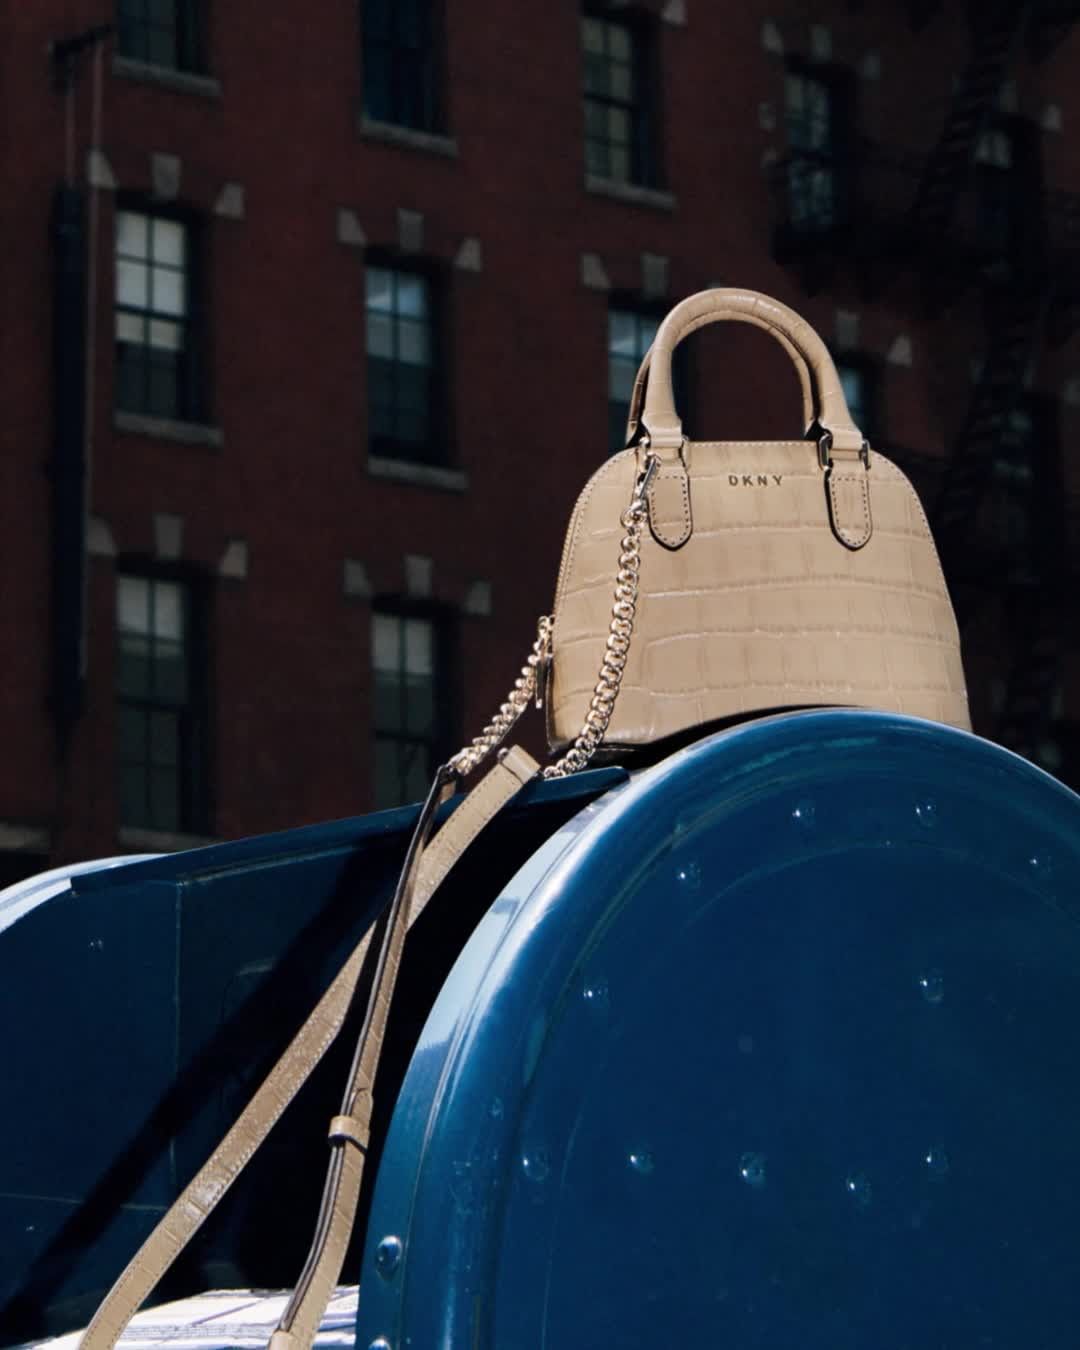 DKNY - Where did you get that bag?
Shop the Stefani Crossbody on DKNY.com. #DKNYSTATEOFMIND